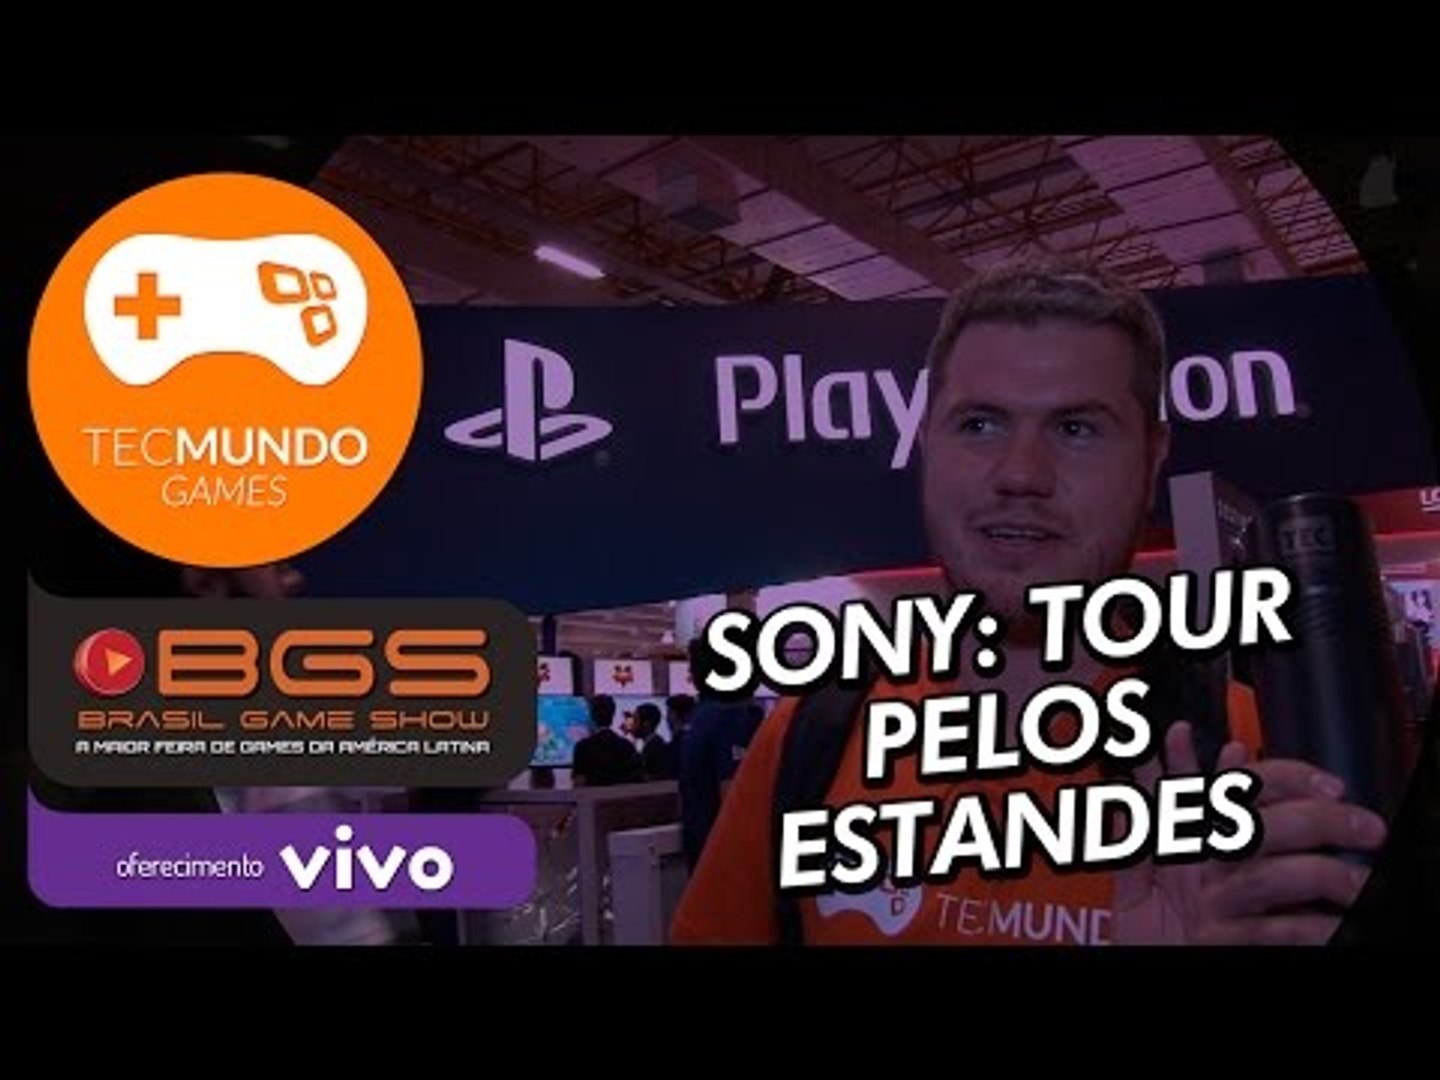 Sony: Tour pelos estandes [BGS 2015] - TecMundo Games - Vídeo Dailymotion